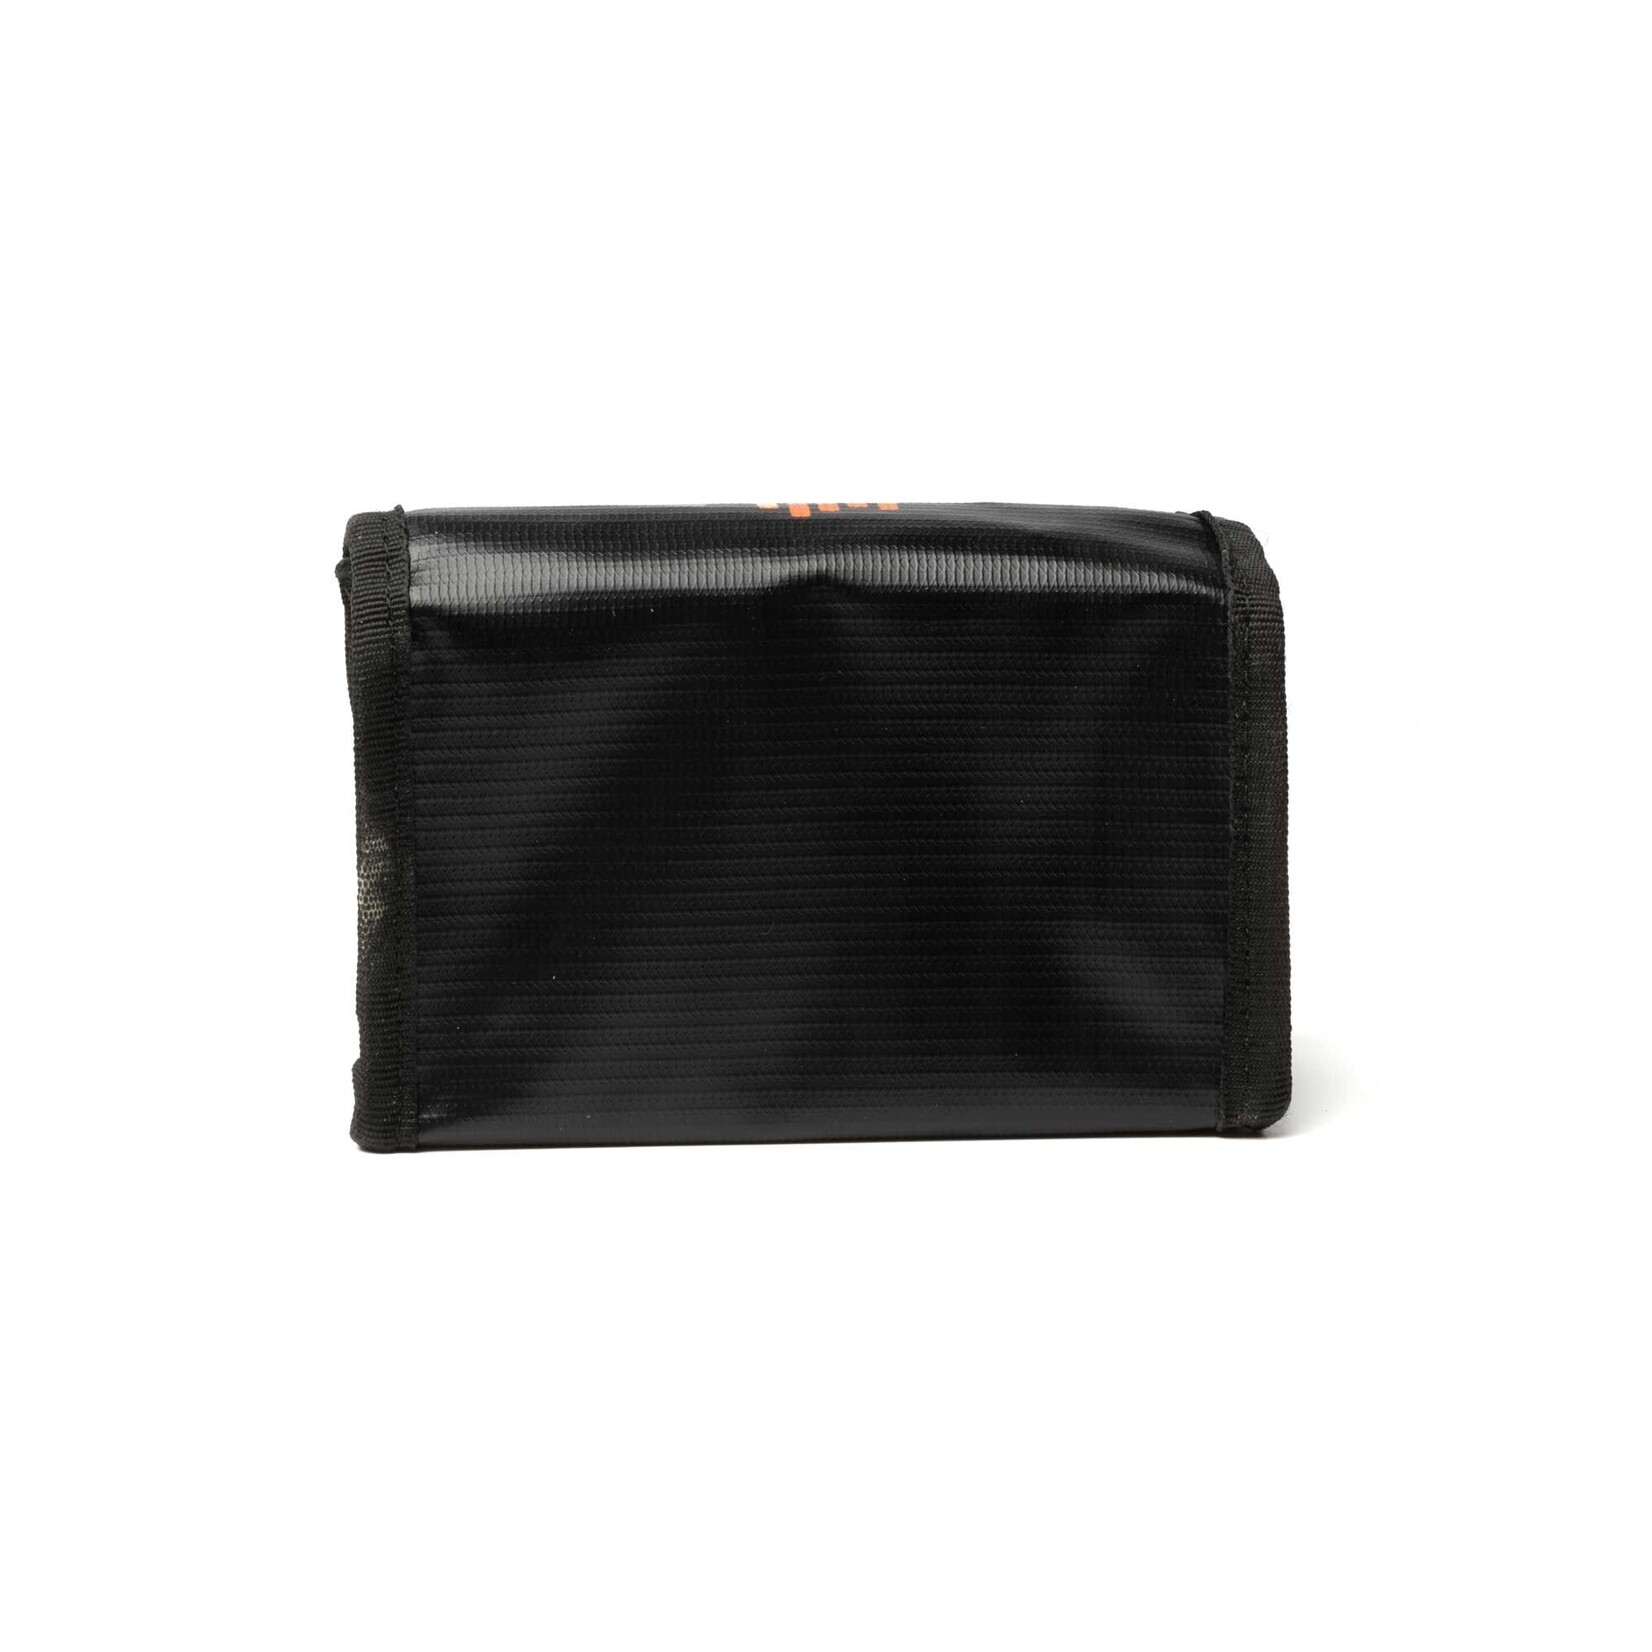 Spektrum Smart Lipo Bag, 14 x 6.5 x 8 cm